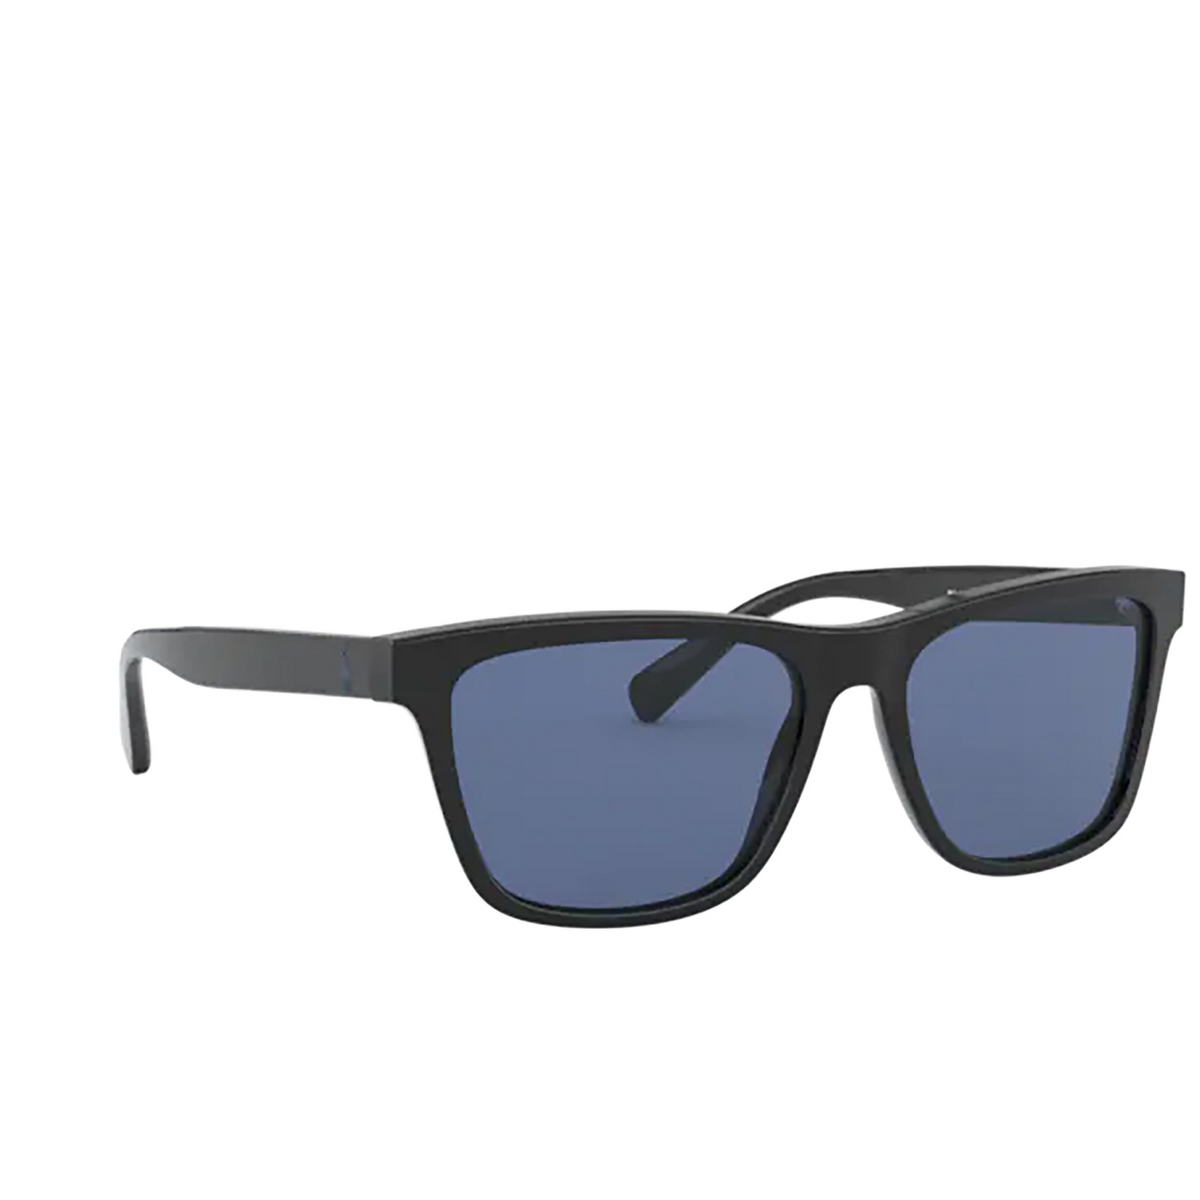 Polo Ralph Lauren® Square Sunglasses: PH4167 color Shiny Black 500180 - three-quarters view.